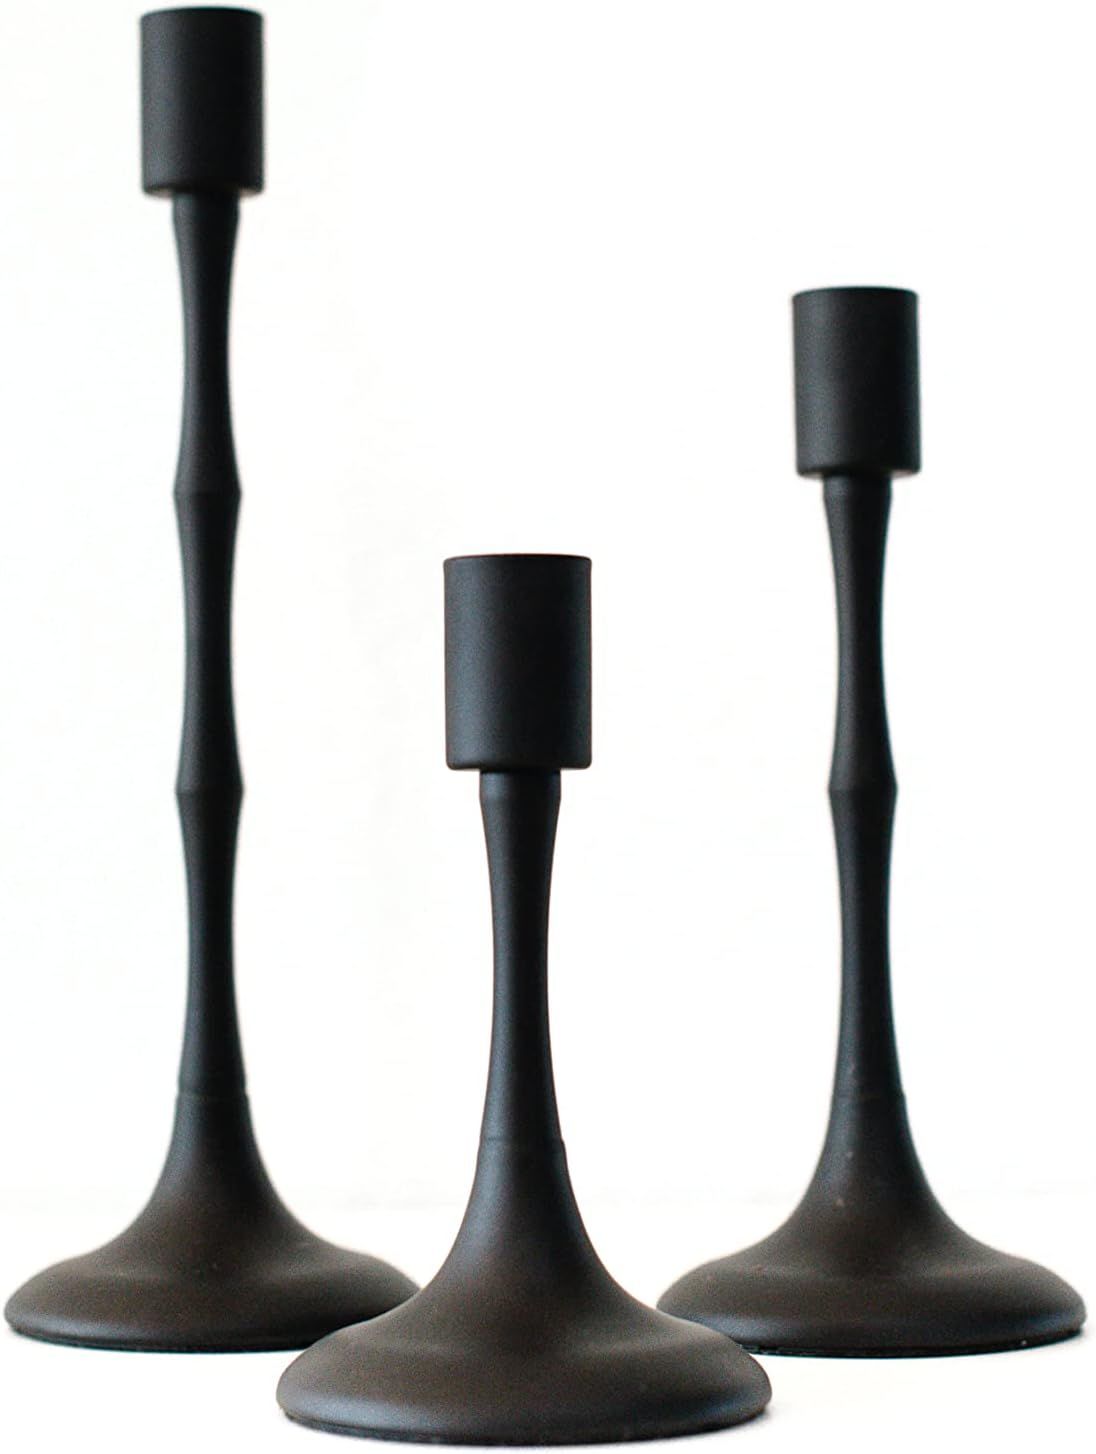 Taper Candle Holders Set of 3 | Tapered Candlestick Holders w/Felt Bottom – Decorative 3” Bla... | Amazon (US)